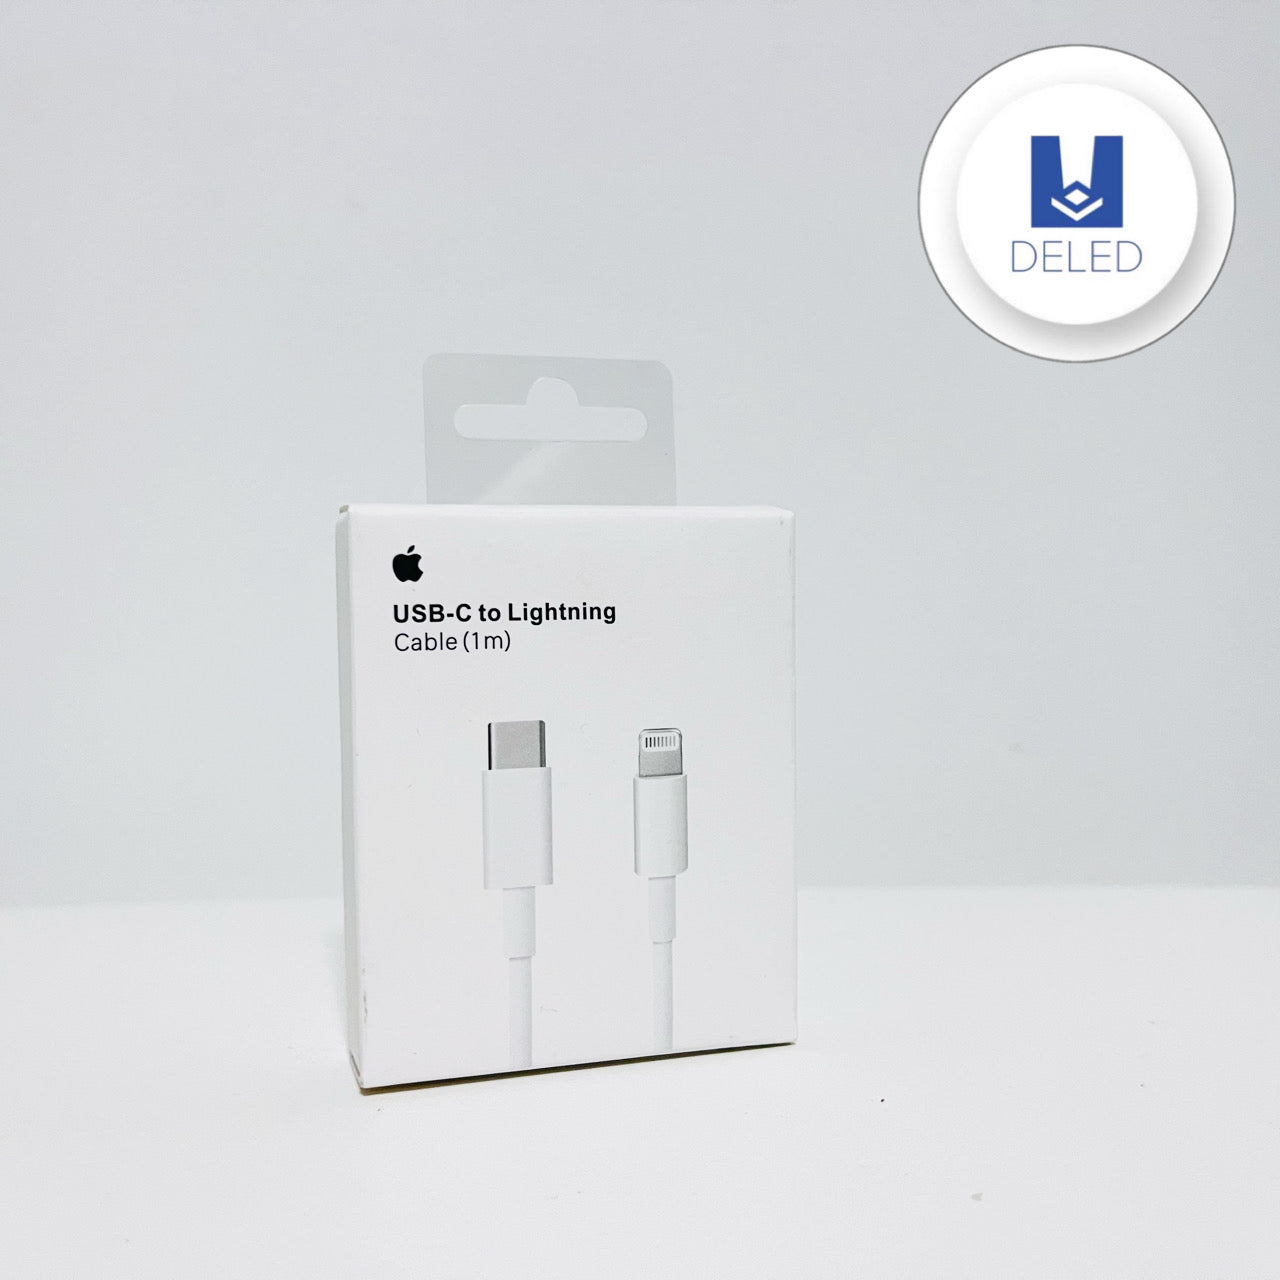 Cable Cargador TURBO USB-C Lightning para iPhone 1 Metro LINK BITS